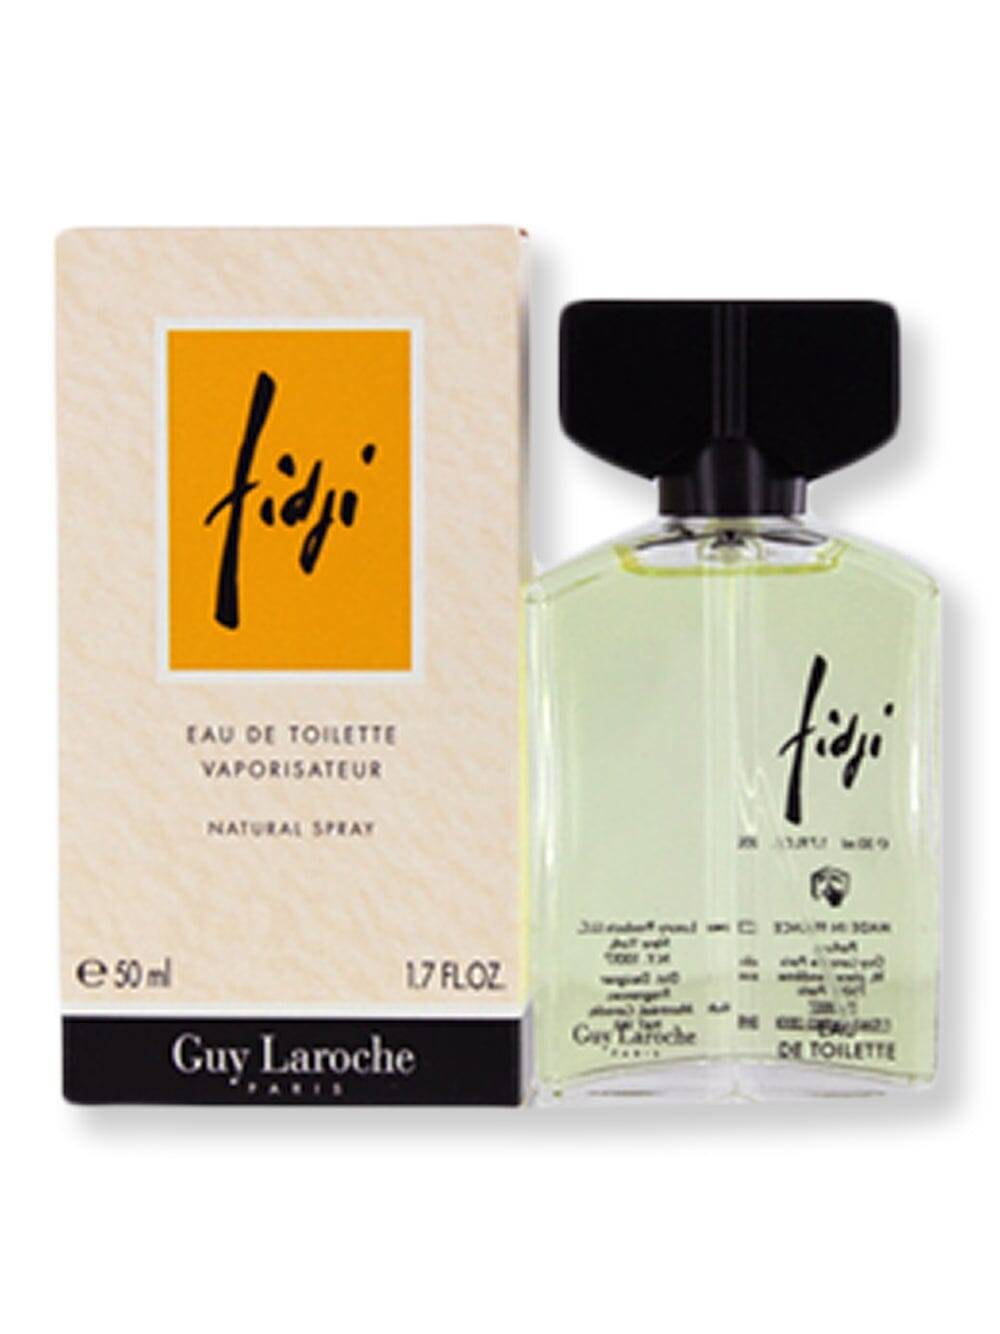 Guy Laroche Guy Laroche Fidji Laroche EDT Spray 1.7 oz Perfume 